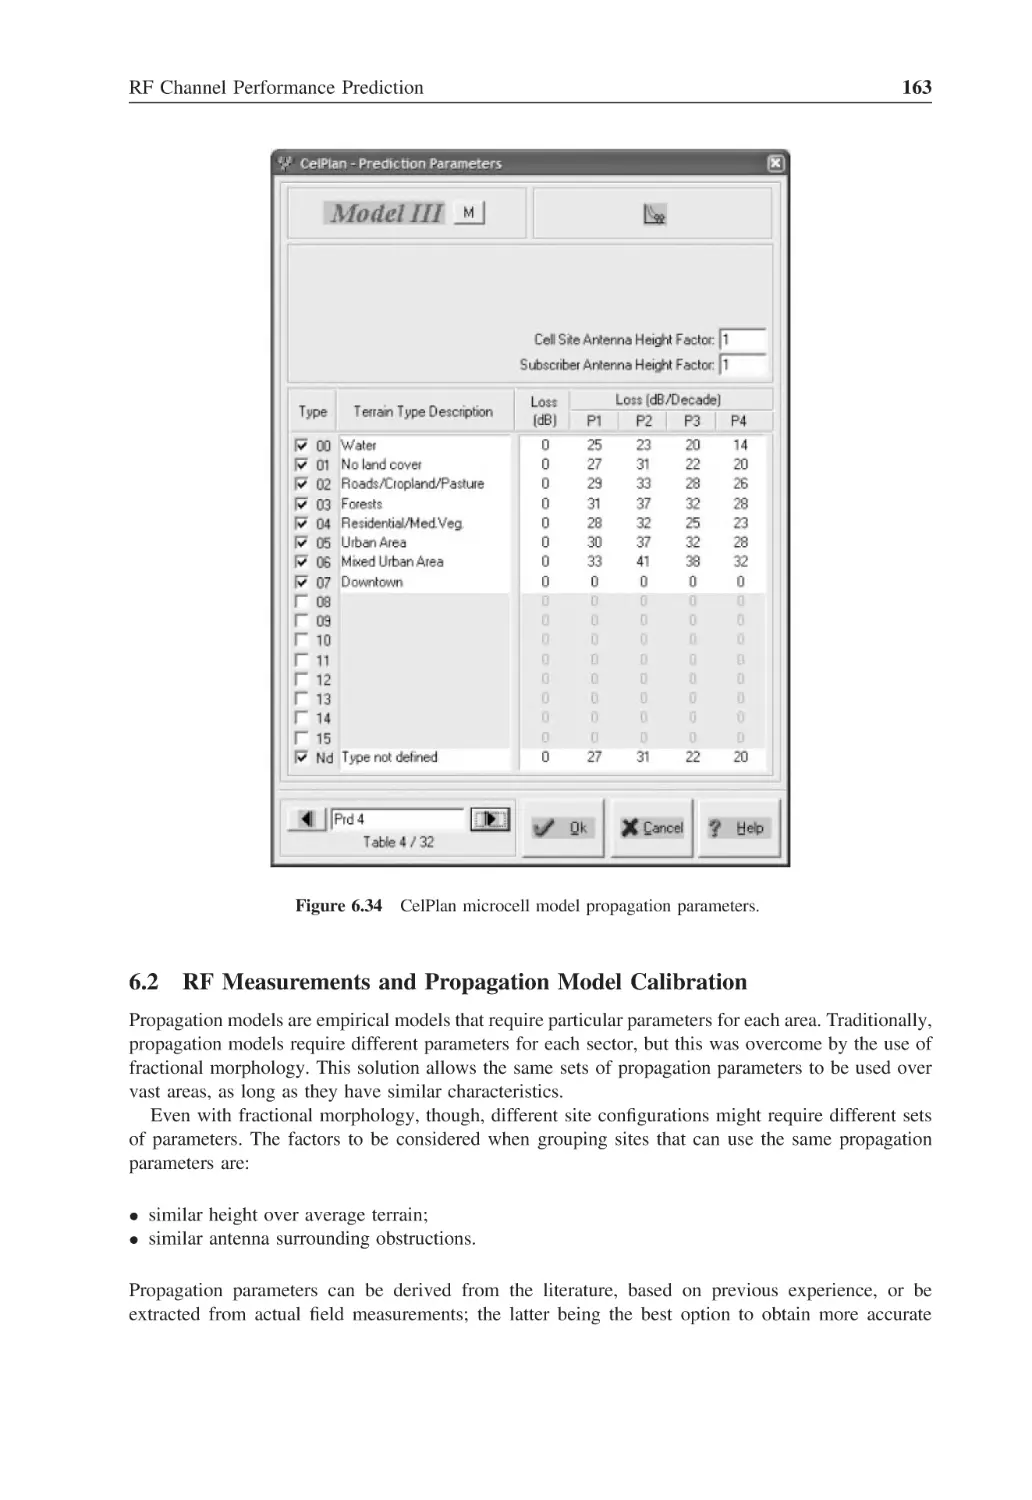 6.2 RF Measurements and Propagation Model Calibration